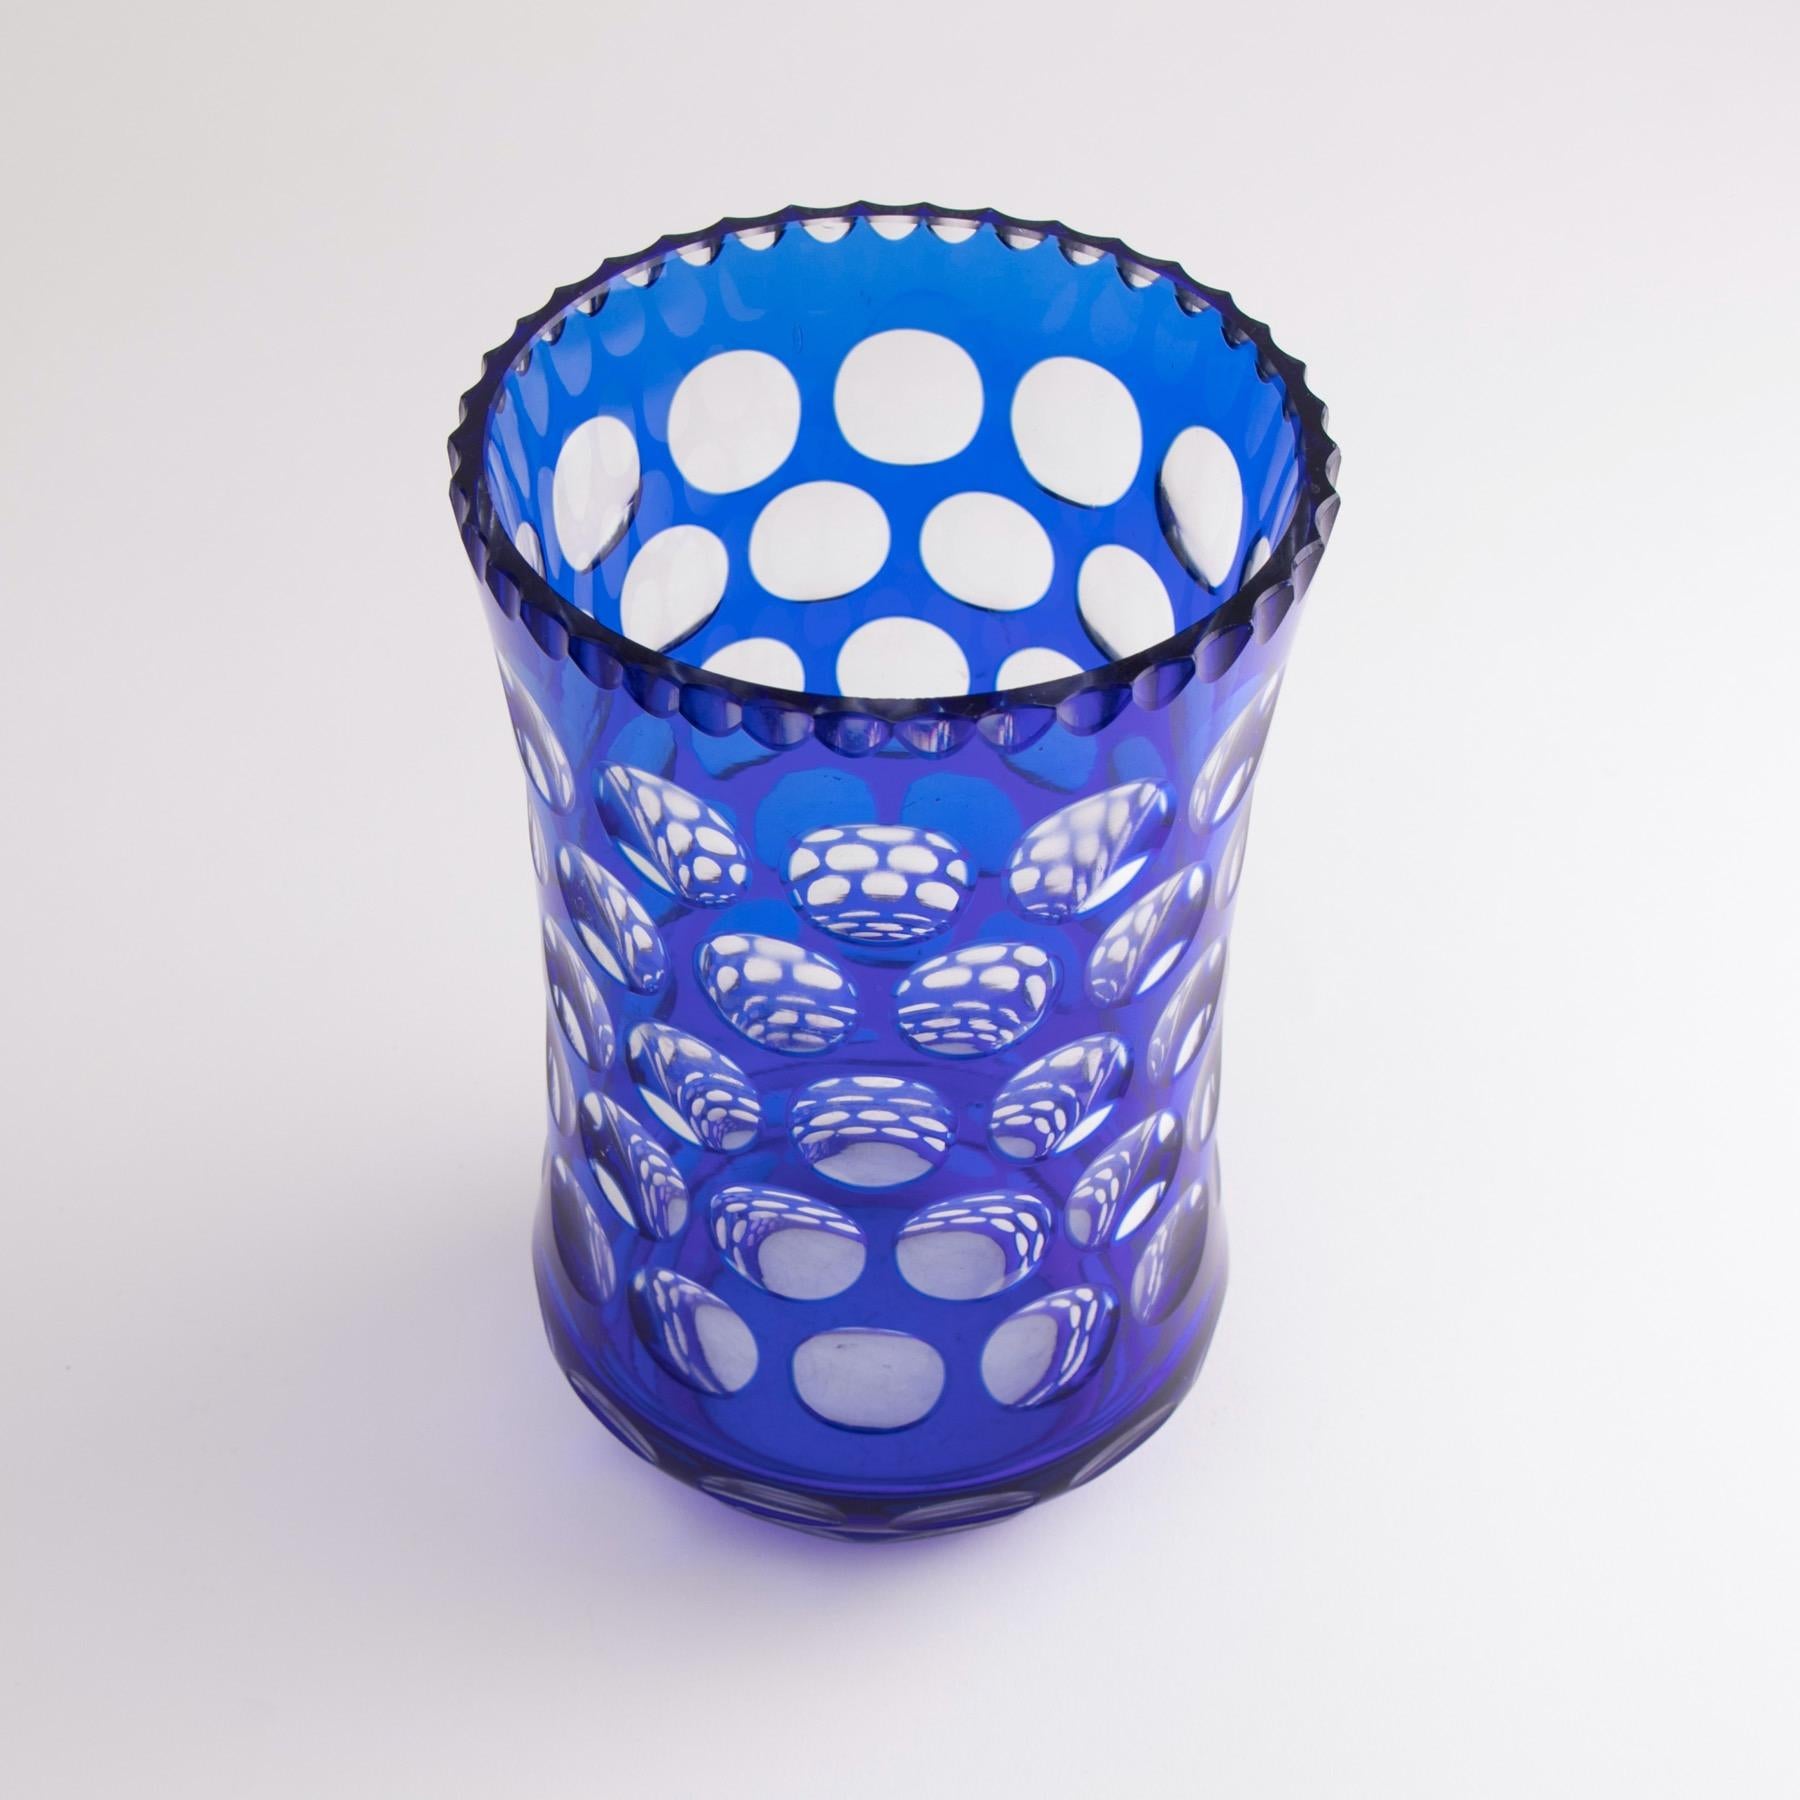 Art Deco Val St Lambert crystal vase. Blue over clear glass.
Stunning cut crystal vase, deep blue over layer cut through to clear creating an amazing affect
Stunning heavy cut crystal vase.
Measures: H 21.5cm, W 13.5cm, D 13.5cm
Belgium, circa